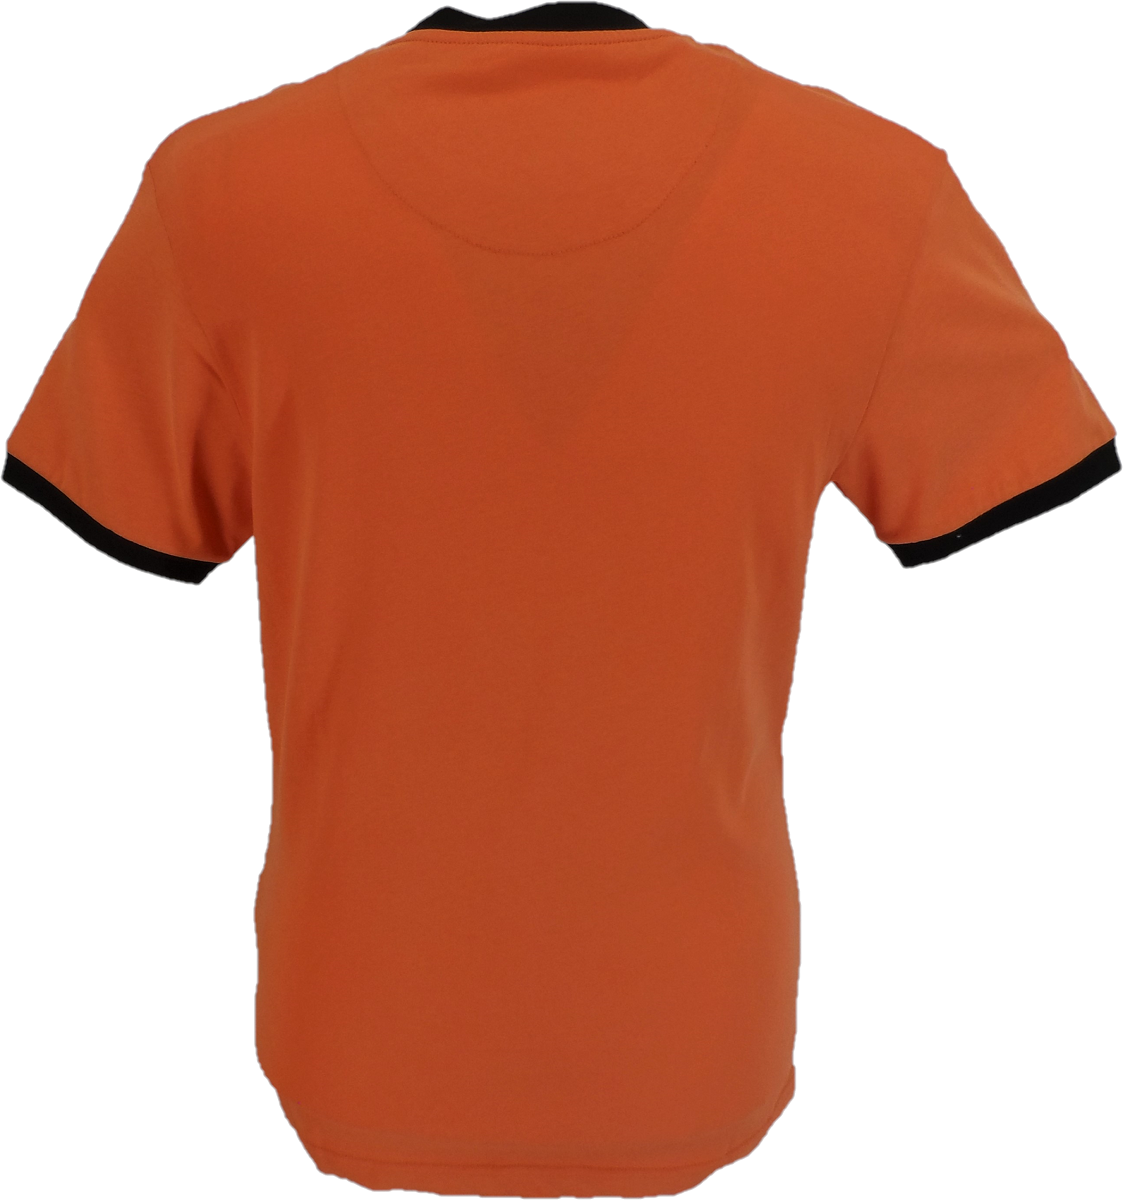 Trojan Records Orange Classic Helmet 100% Cotton T-Shirt